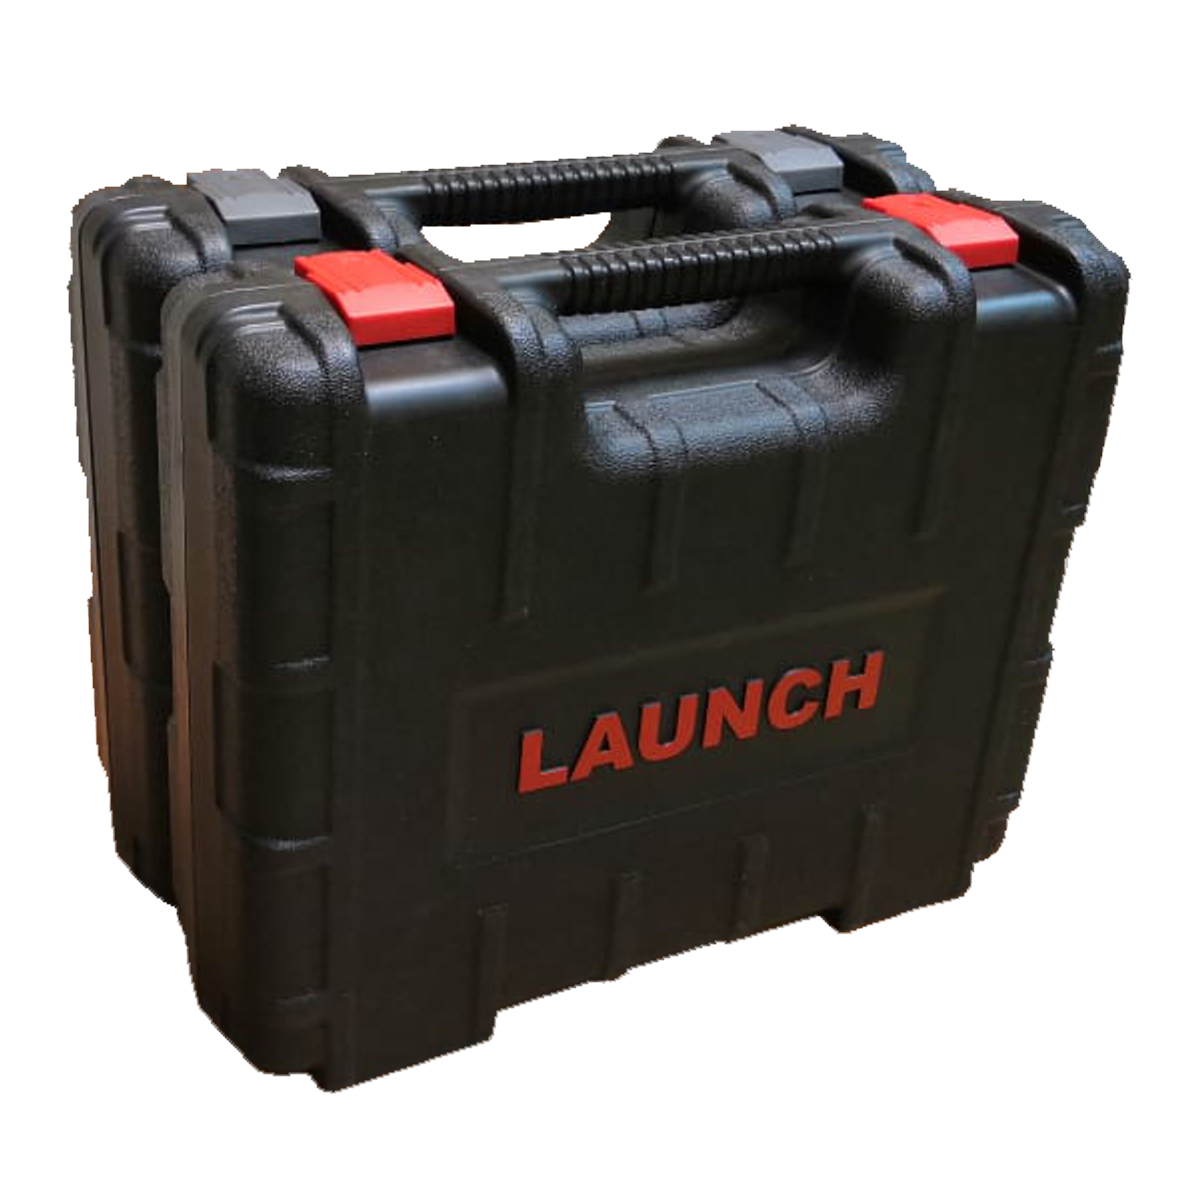 Launch company. Launch x431 Pad v. Launch Pad 5 Pro s.